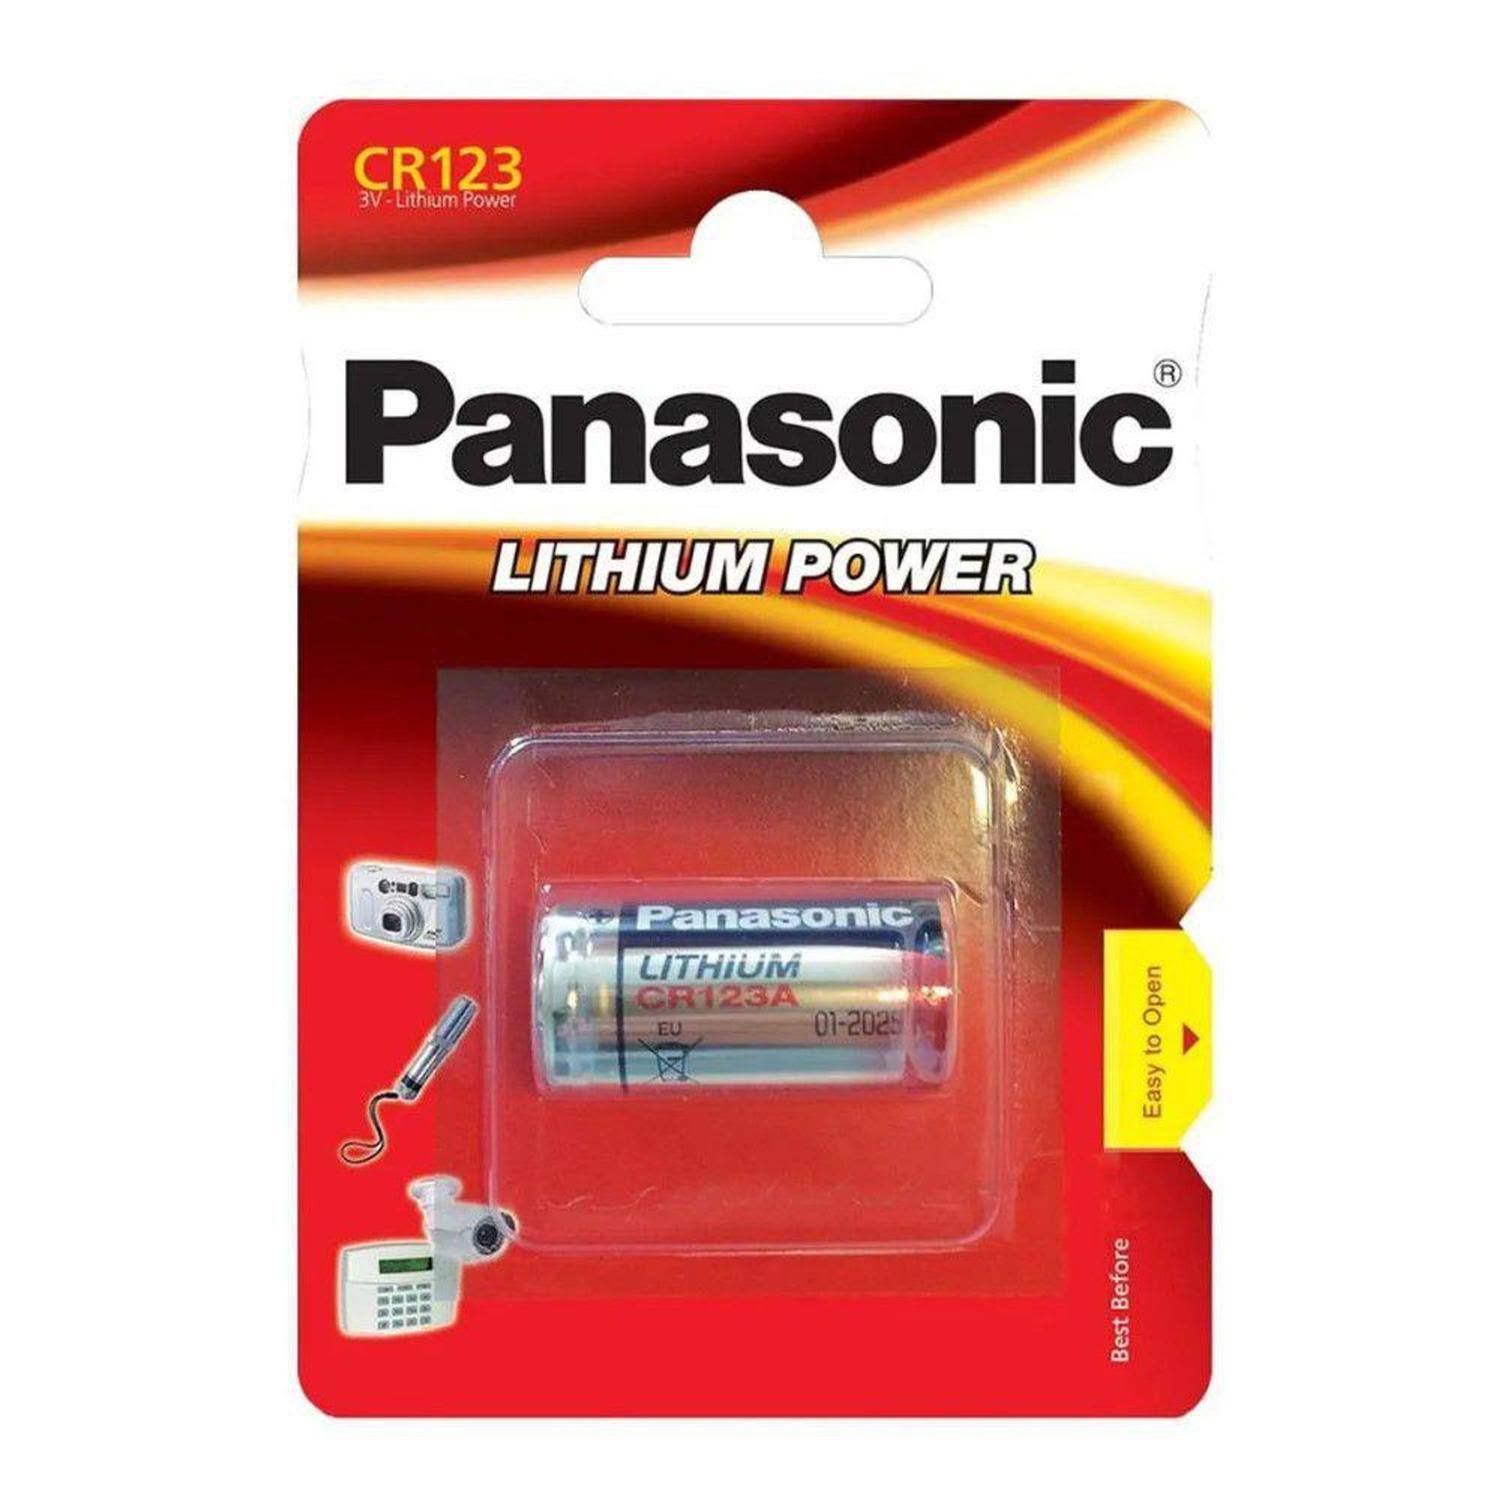 Panasonic CR-123A Lithium Camera Battery - 3v